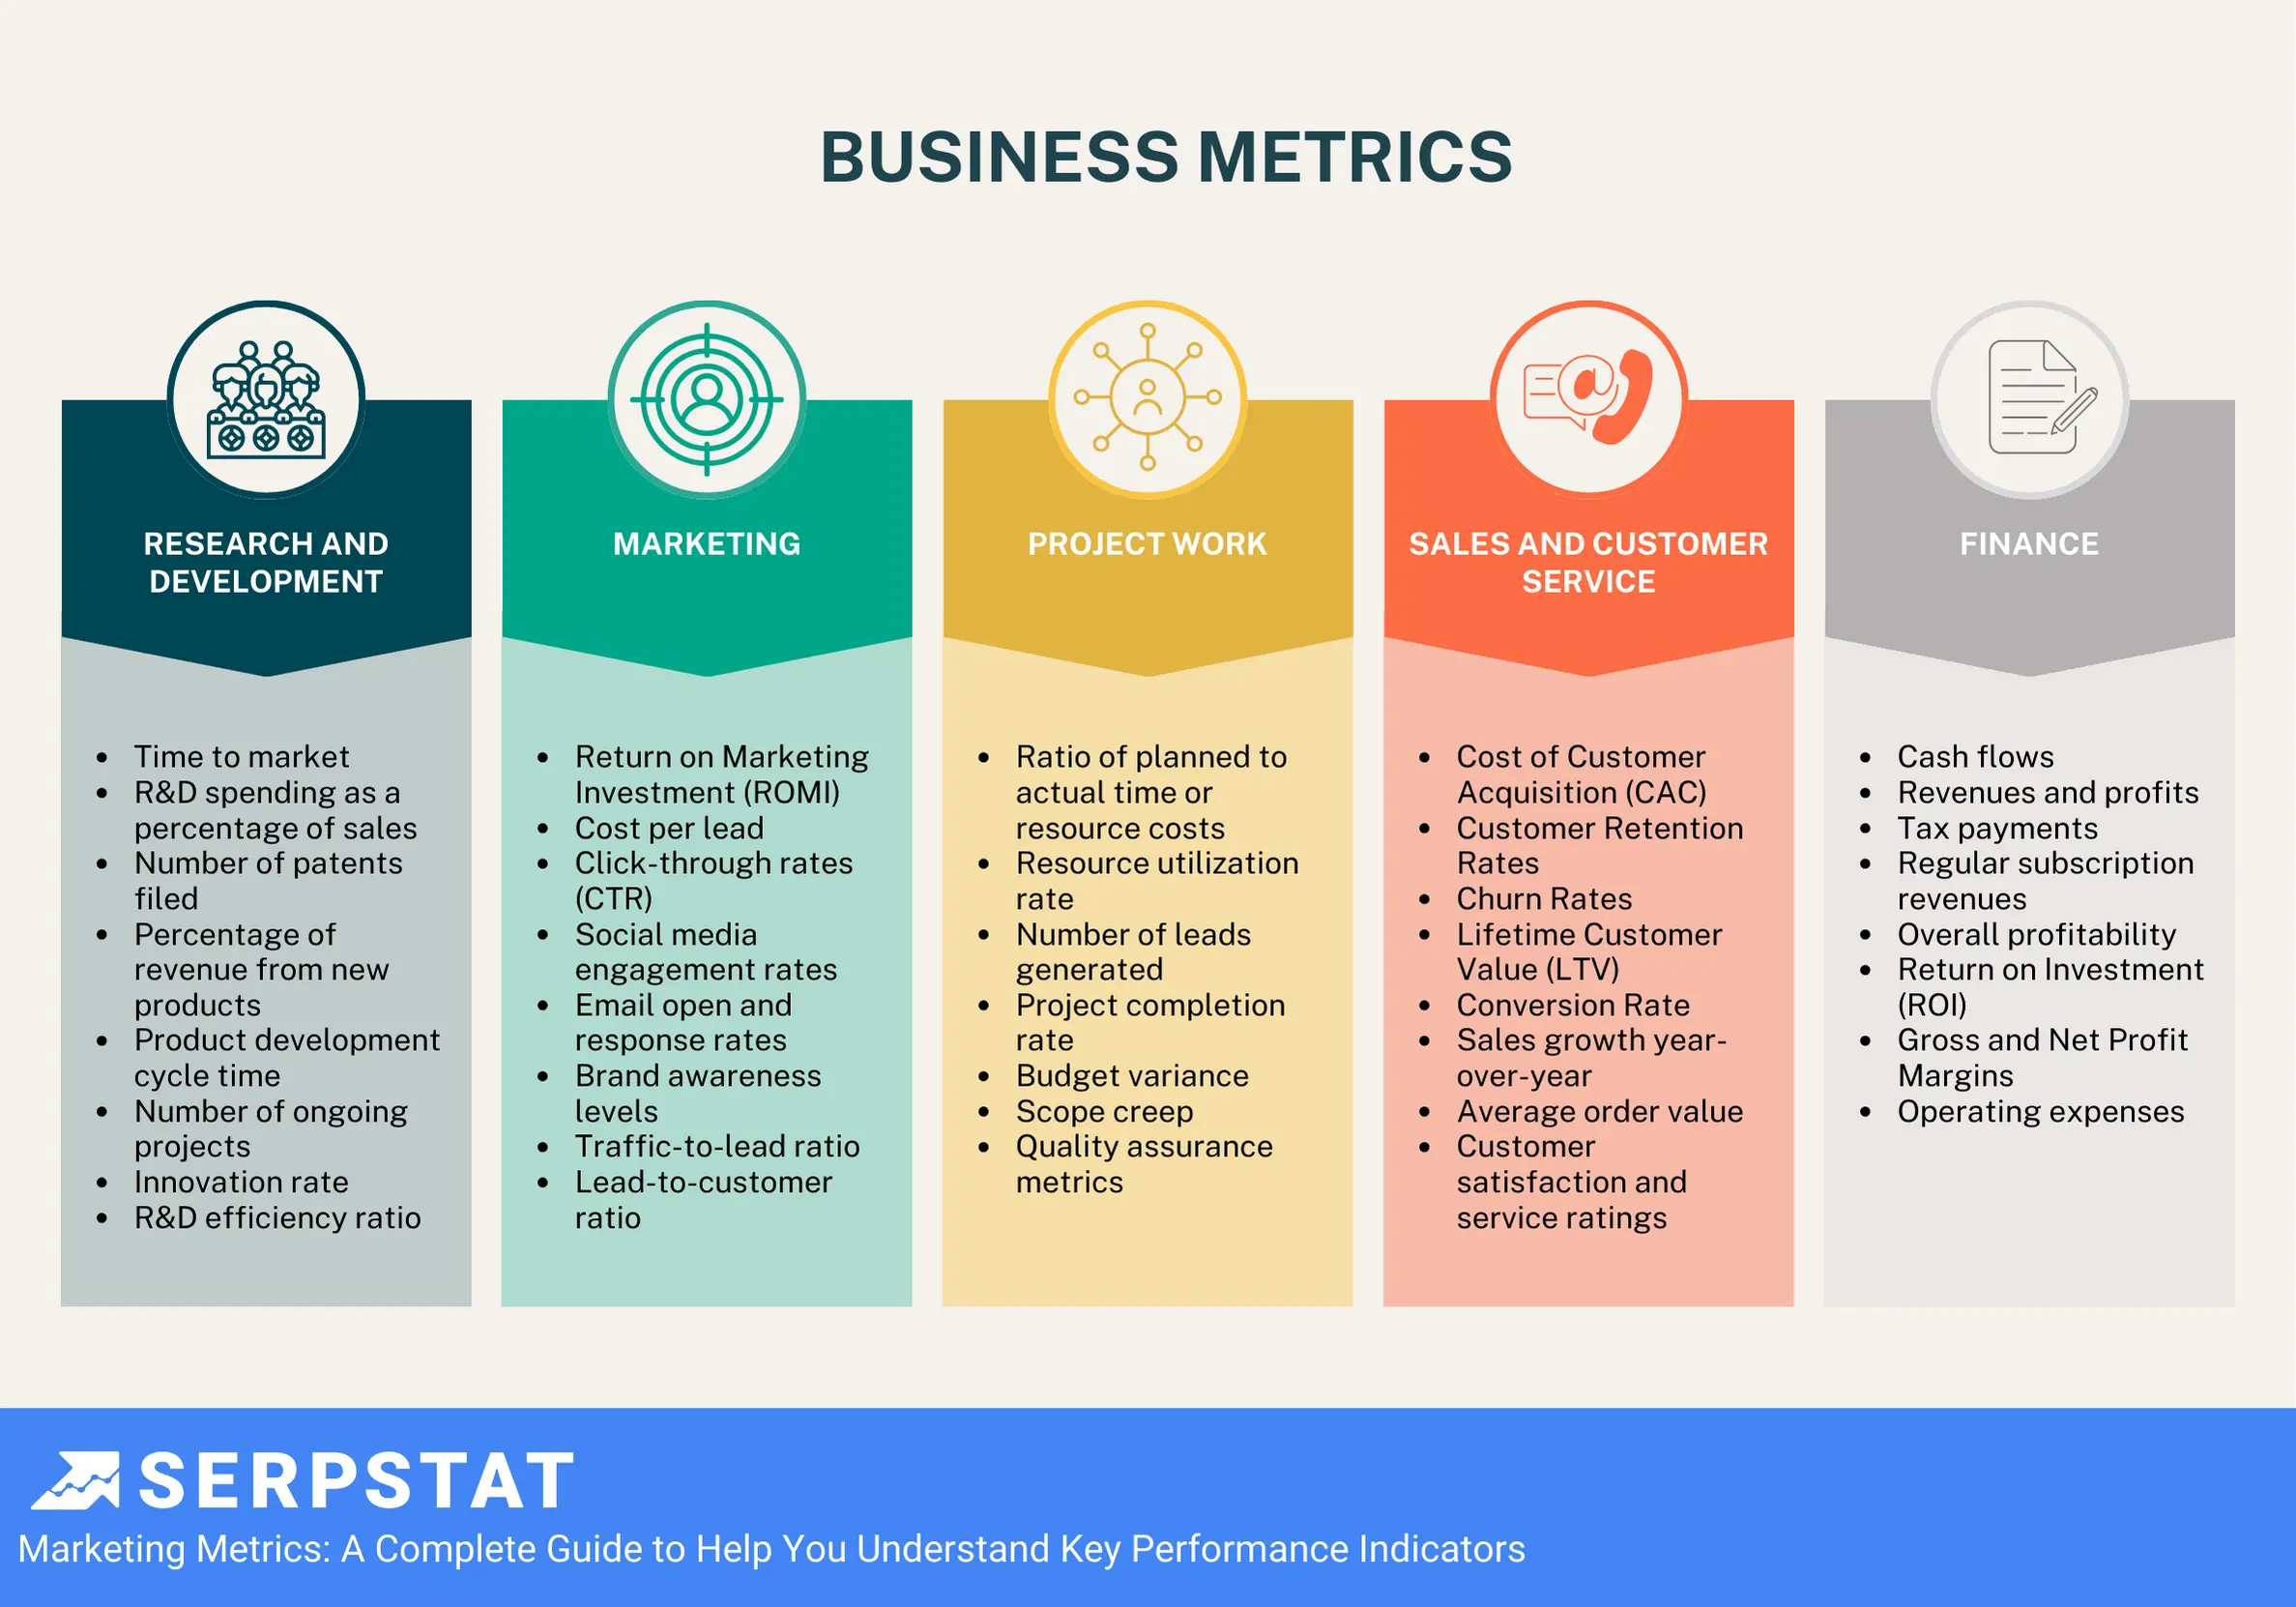 Business metrics, Serpstat